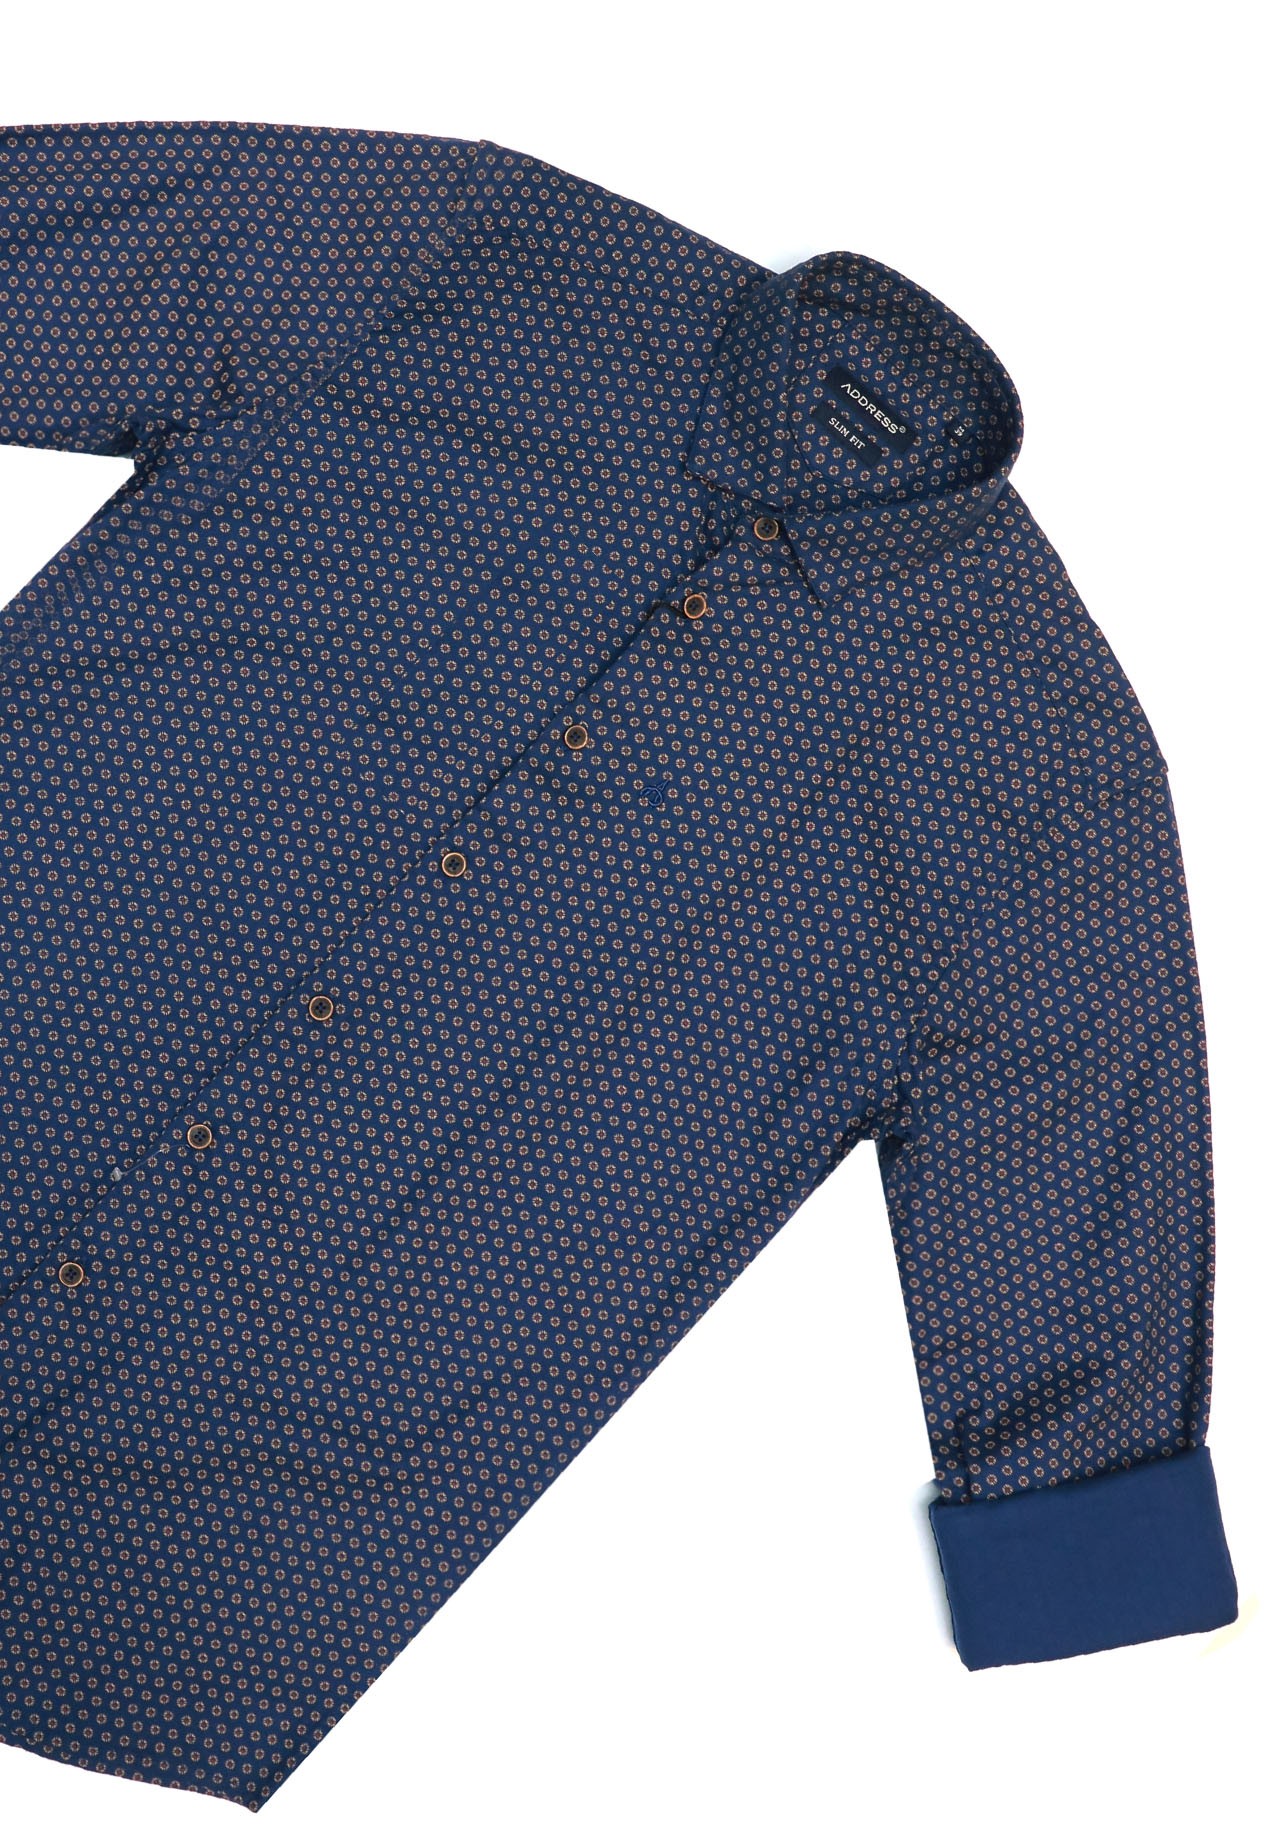 Address Casual Shirt Blue With Dots Slim Fit, AC19JU 9592 C, XL